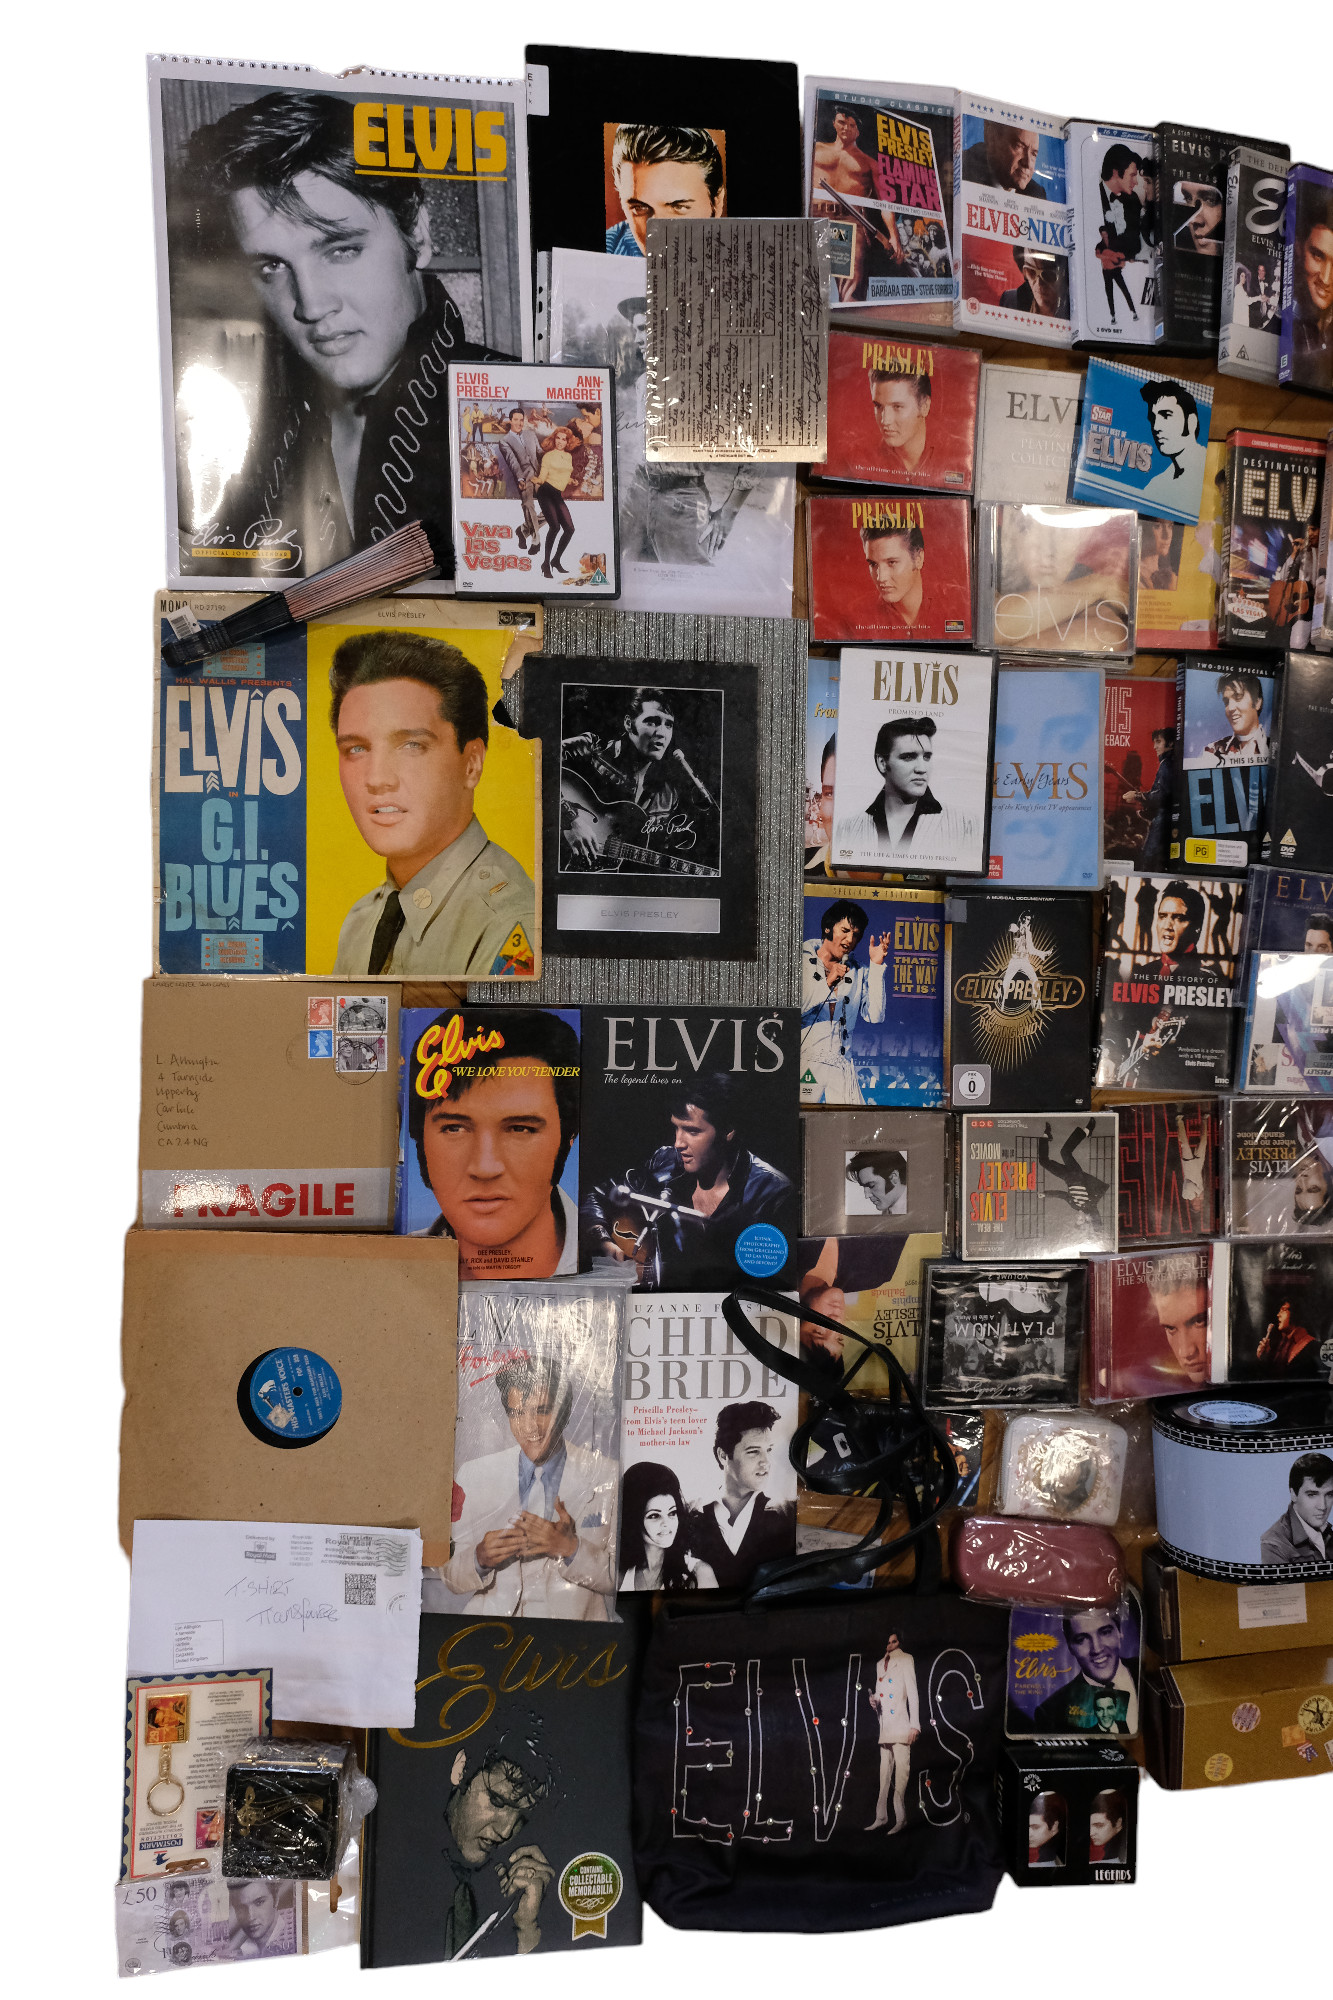 A large collection of Elvis Presley memorabilia including vinyl records, ceramics, CDs, books, - Image 2 of 4